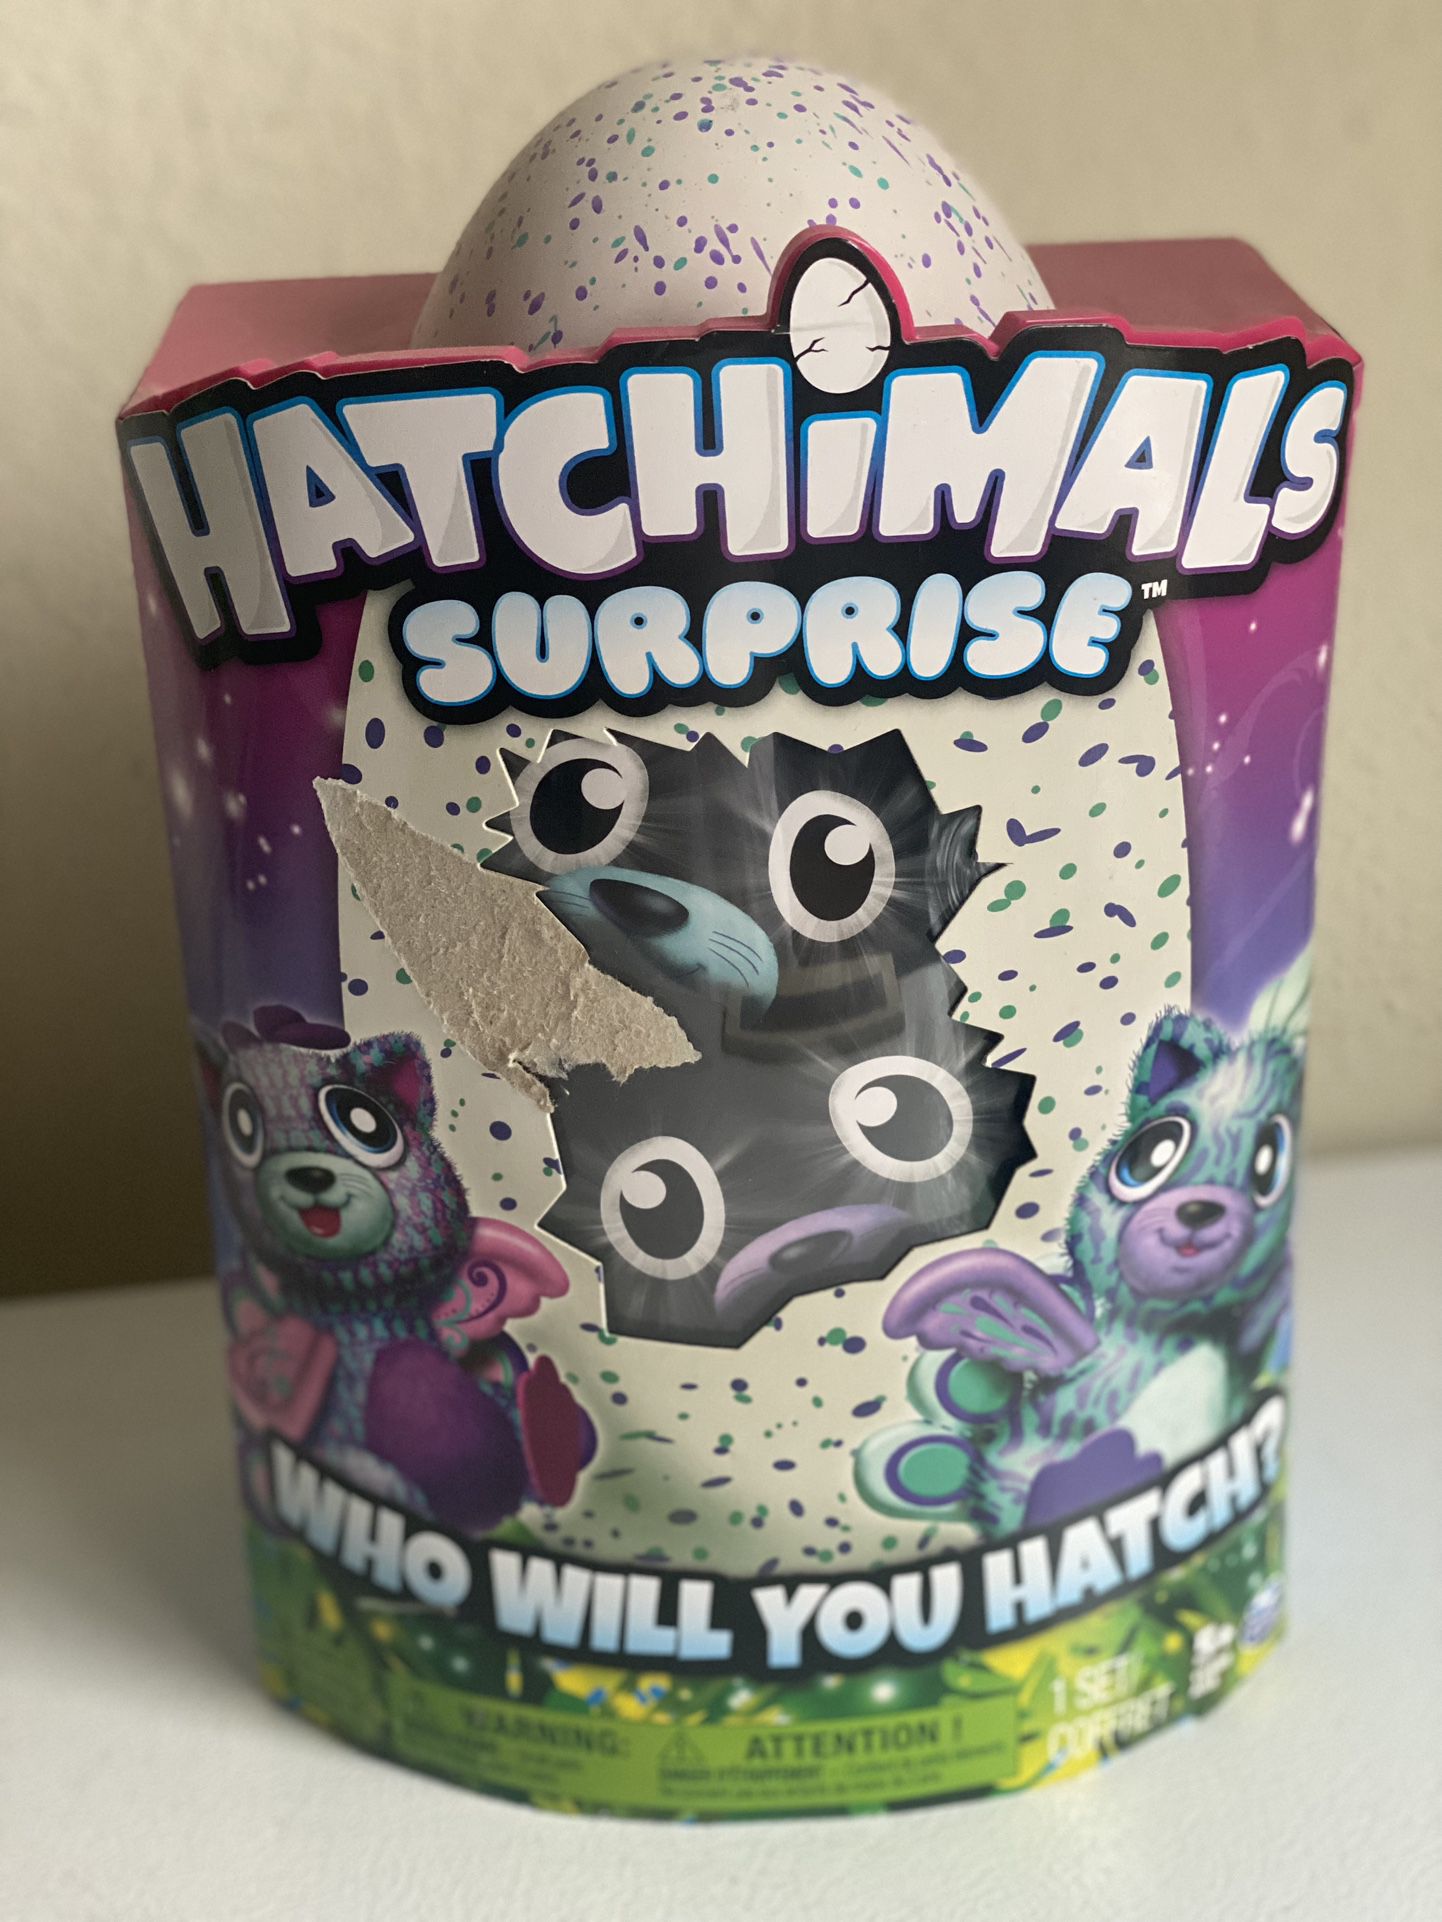 Hatchimals Surprise